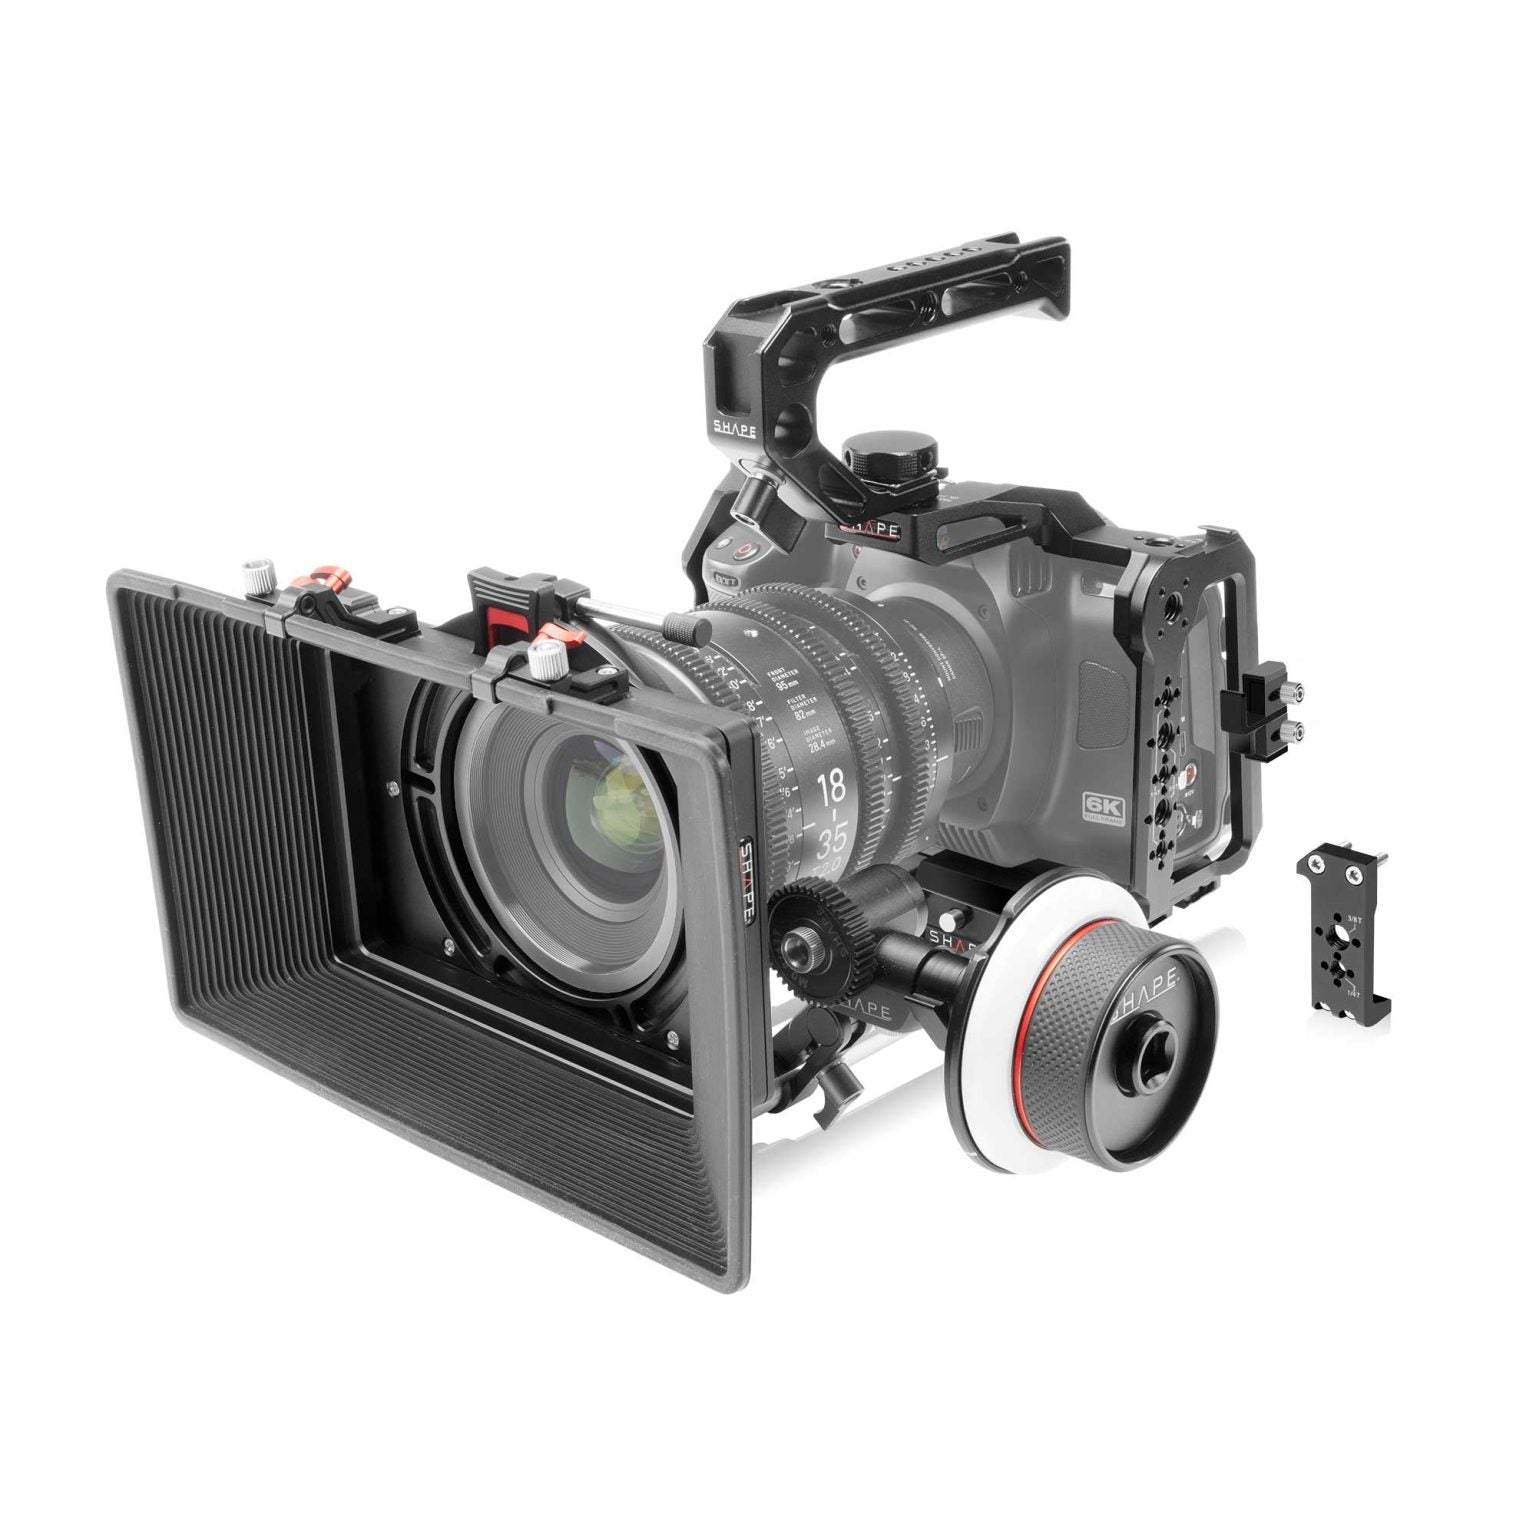 SHAPE Camera Bundle Rig Kit for Blackmagic Cinema Camera 6K/6K PRO/6K G2